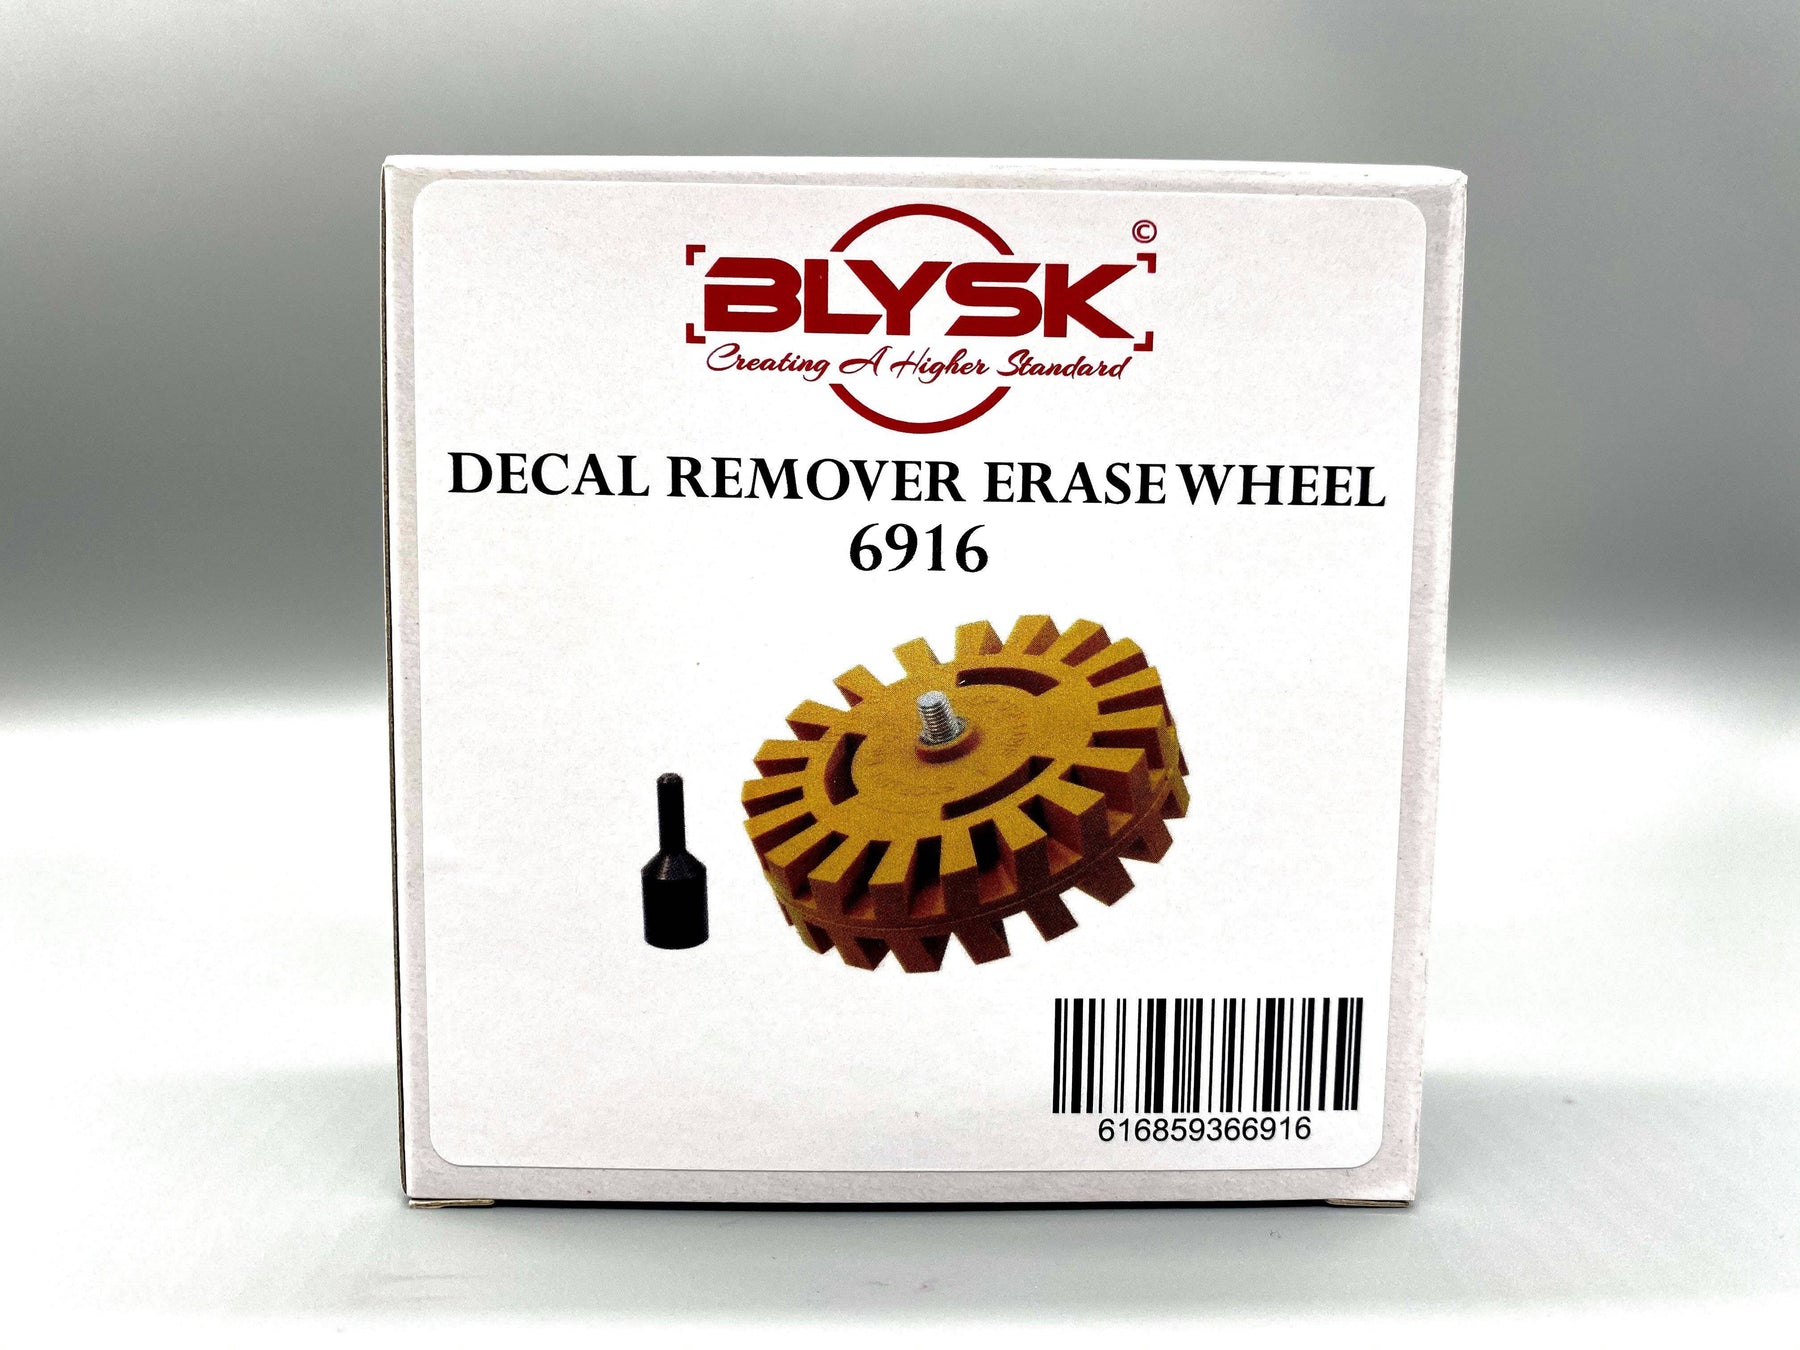 Blysk Decal Remover Erase Wheel - Maazzo